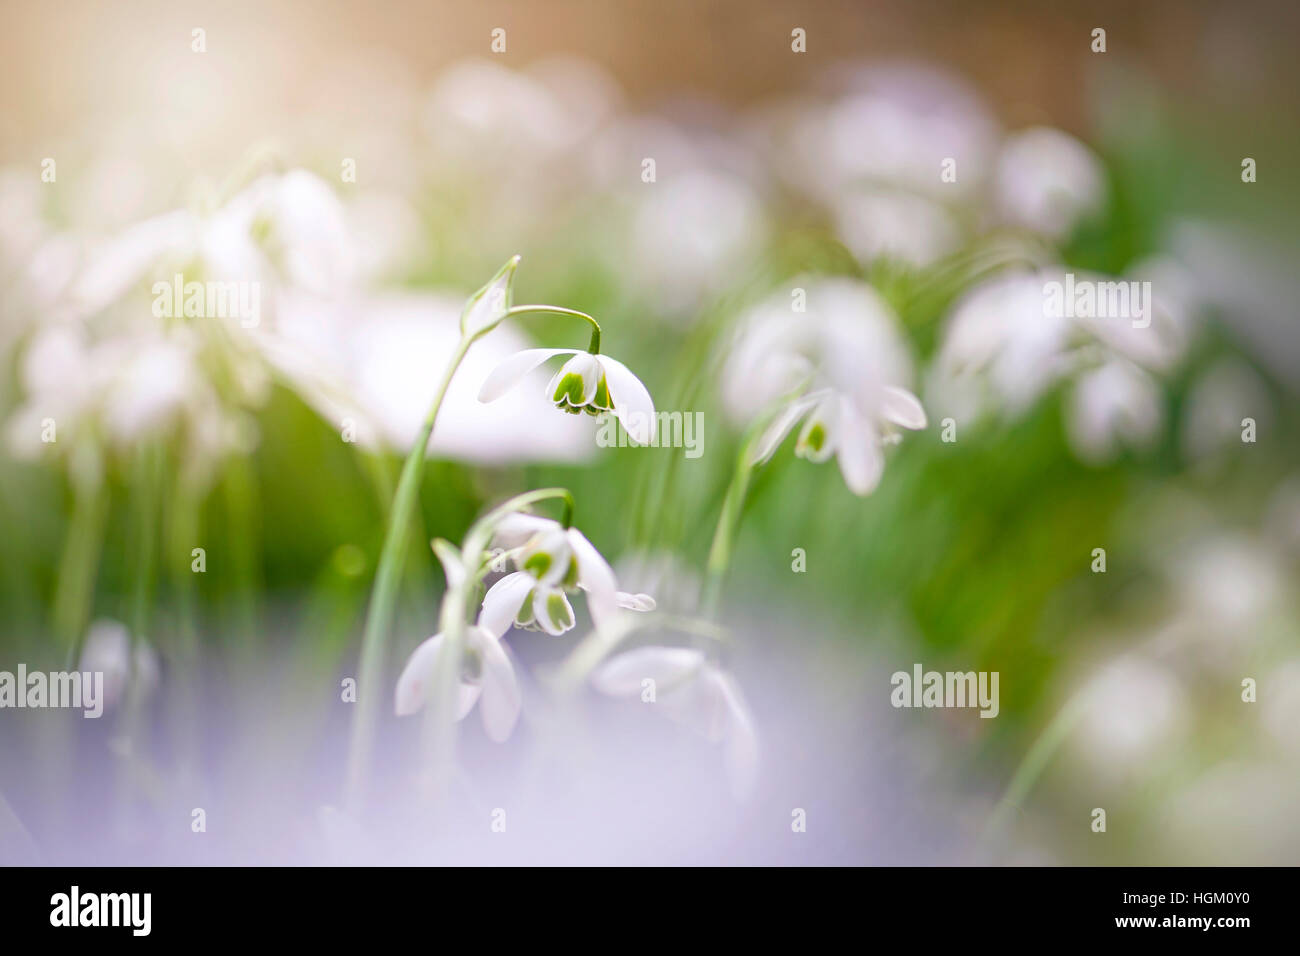 Common Snowdrop white spring flower, also known as Galanthus nivalis Stock Photo